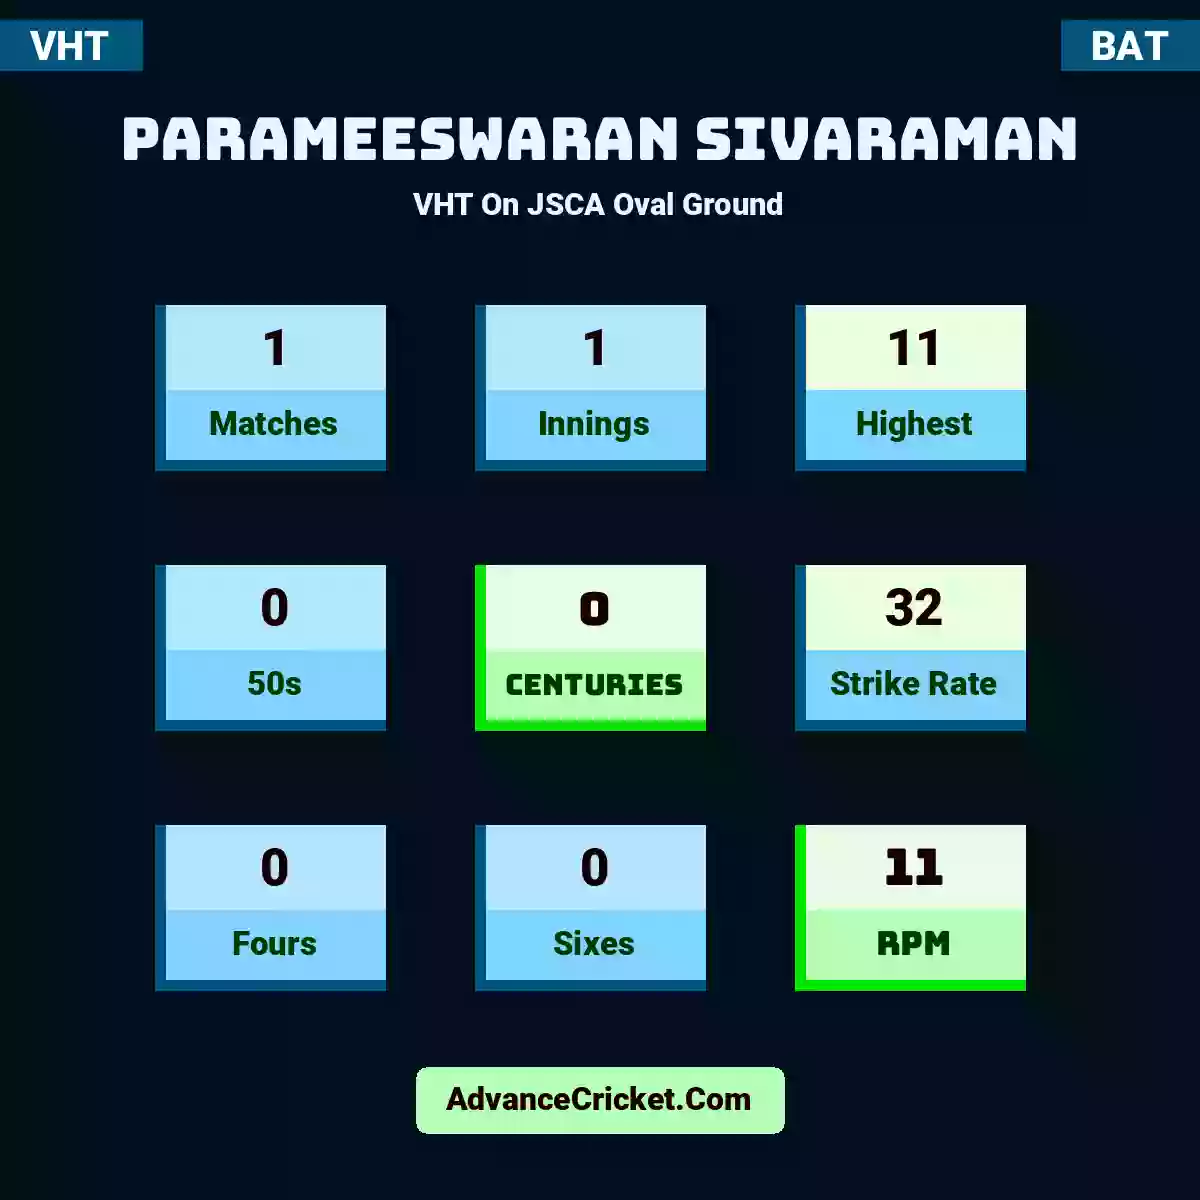 Parameeswaran Sivaraman VHT  On JSCA Oval Ground, Parameeswaran Sivaraman played 1 matches, scored 11 runs as highest, 0 half-centuries, and 0 centuries, with a strike rate of 32. P.Sivaraman hit 0 fours and 0 sixes, with an RPM of 11.